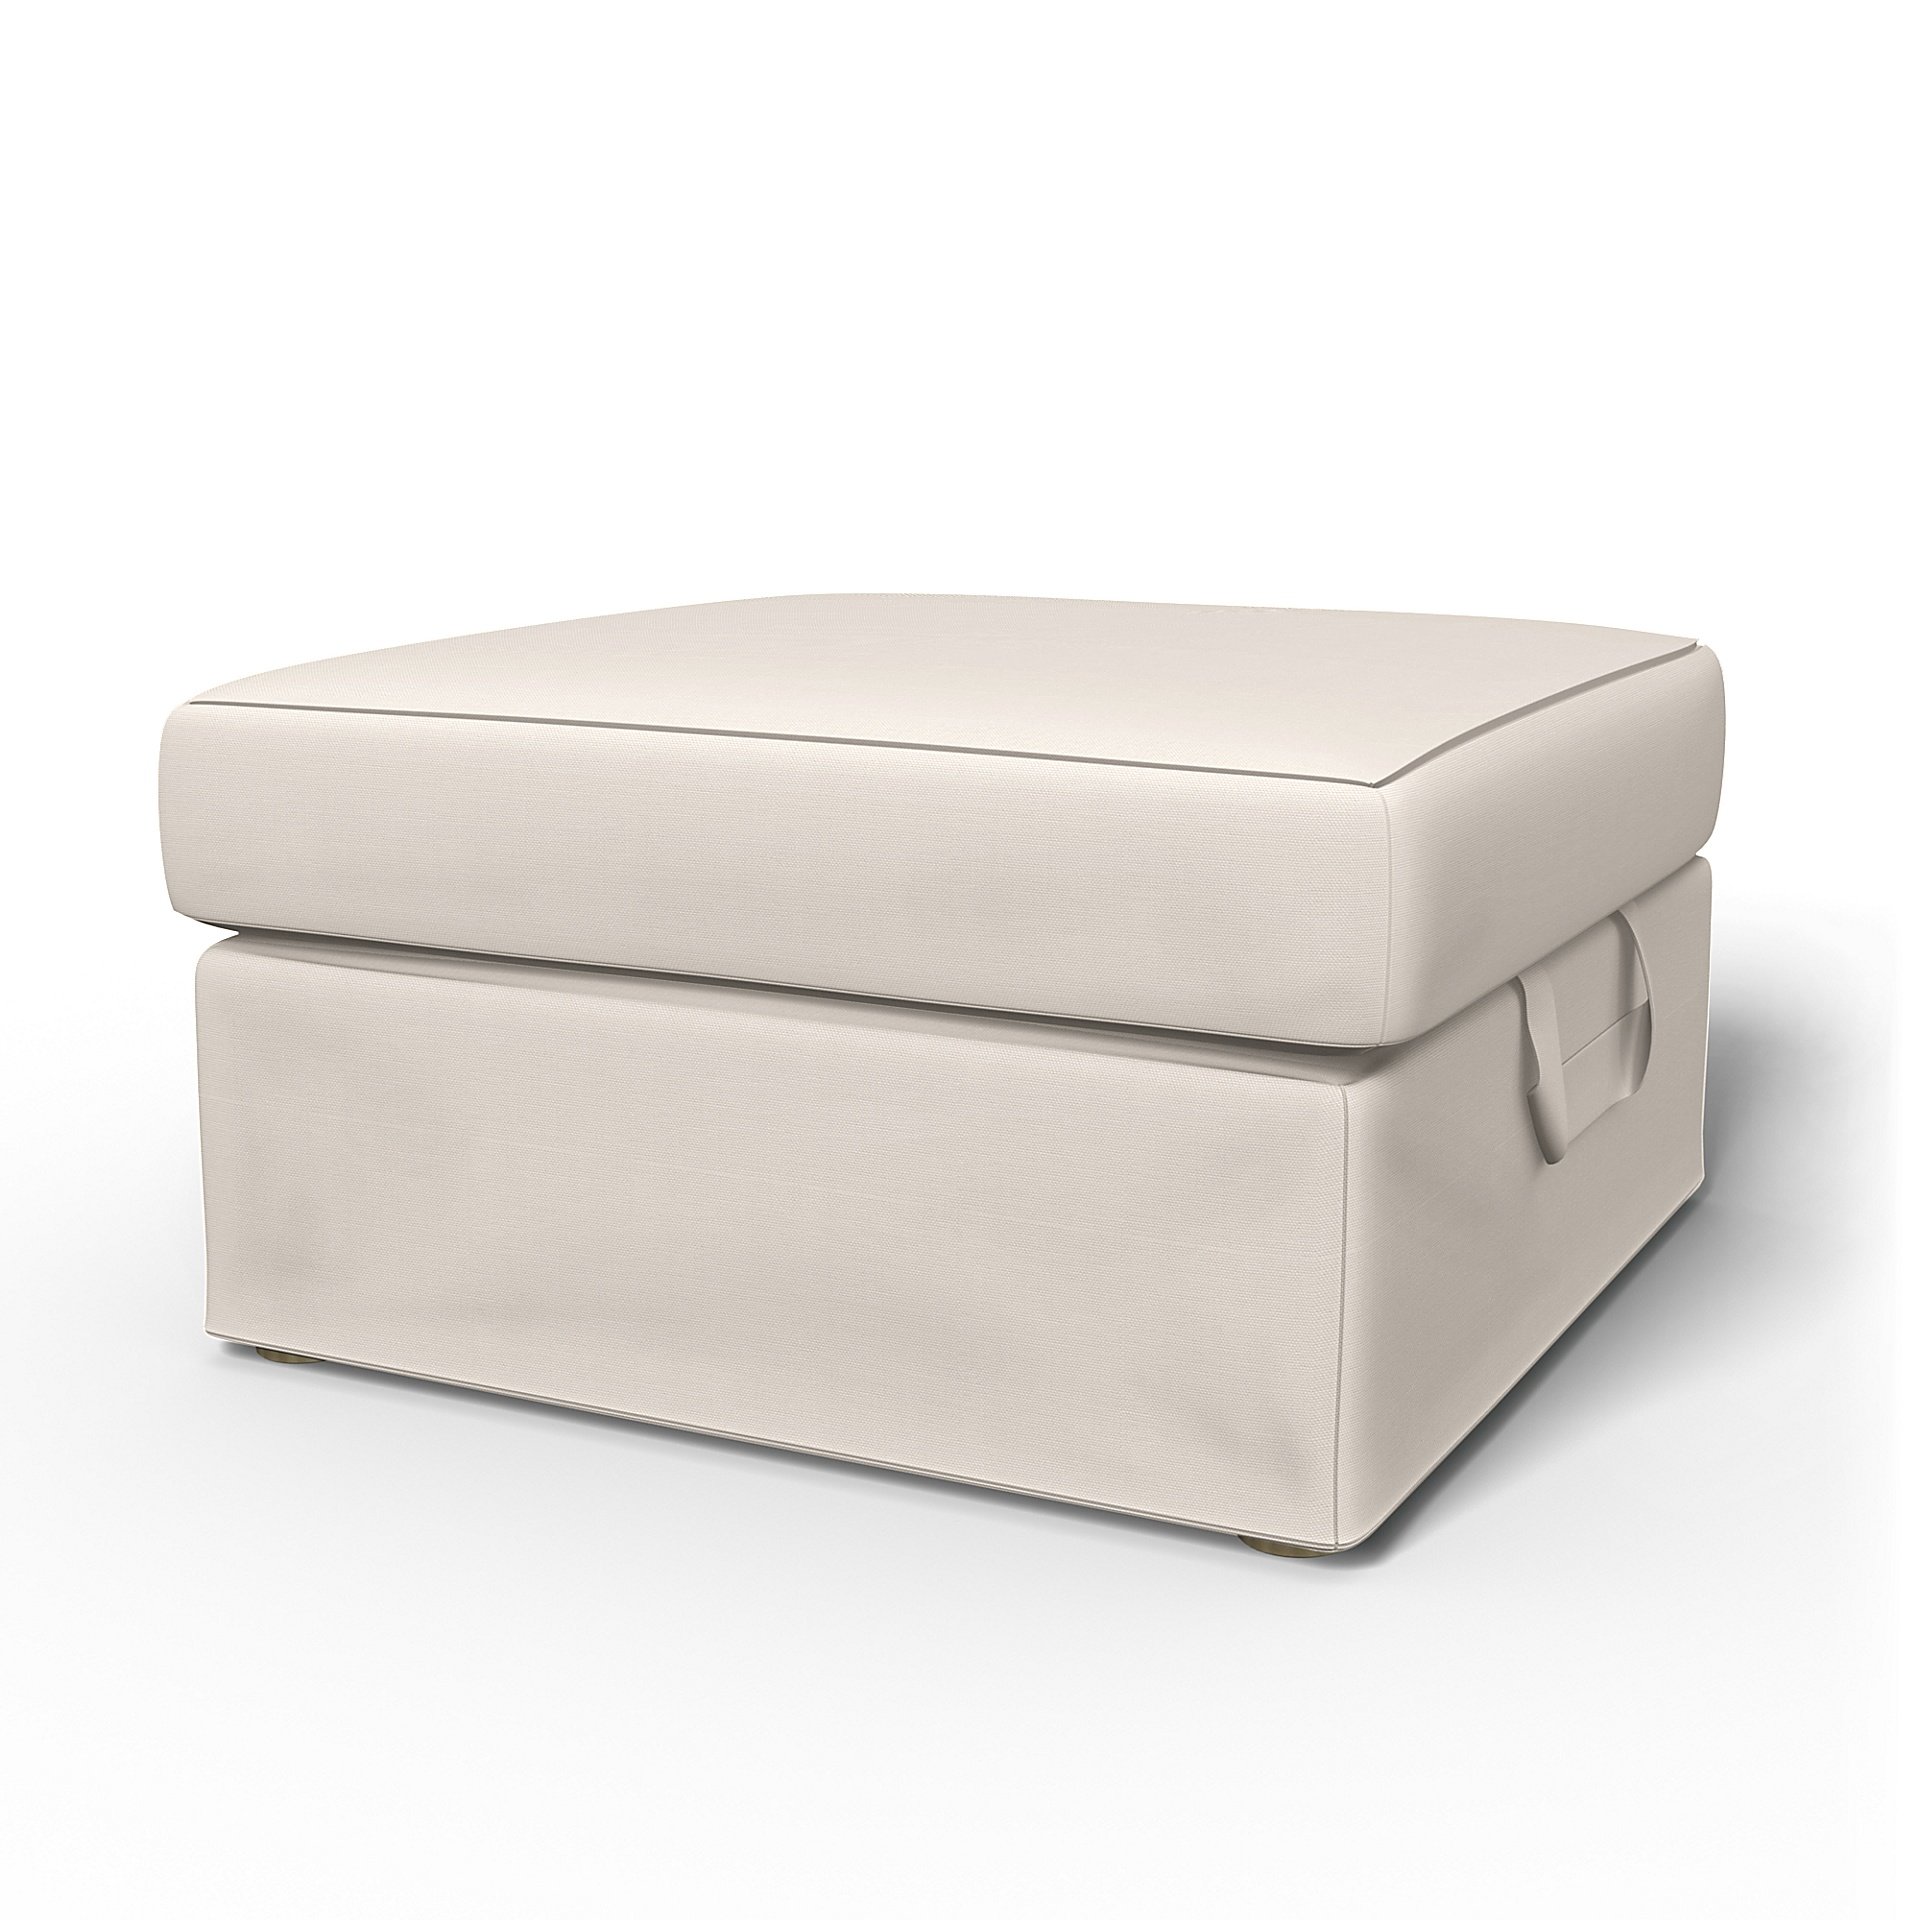 IKEA - Tomelilla Foto Footstool Cover, Soft White, Cotton - Bemz